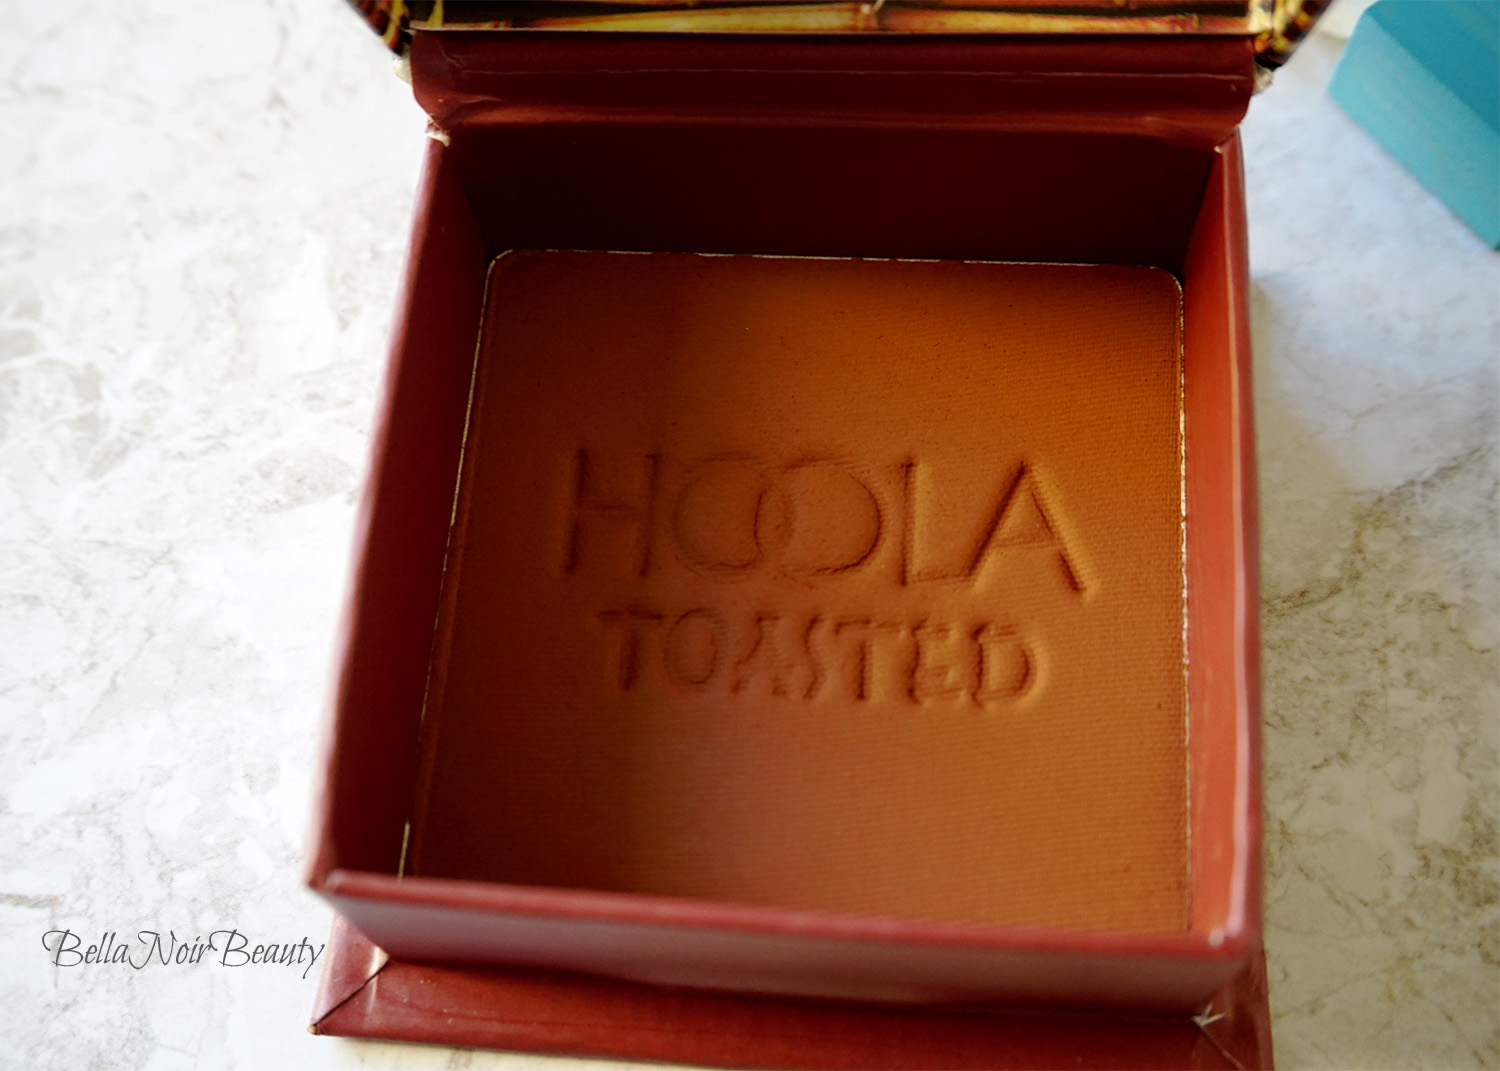 Benefit Hoola Toasted Bronzer | bellanoirbeauty.com